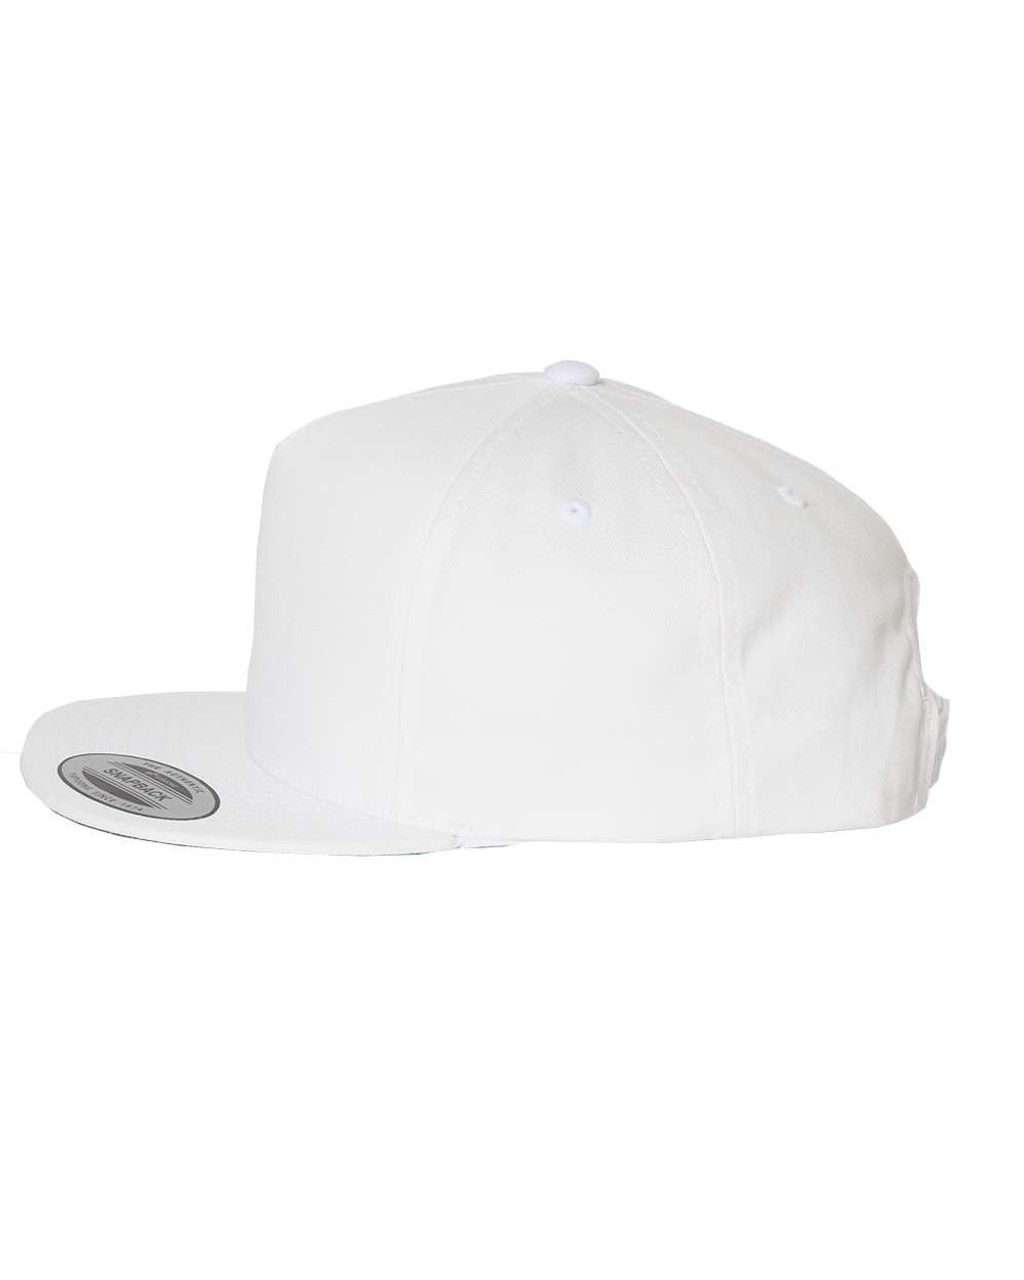 Star Force Imperial Cog Wars Emblem Heat Pressed Flat Bill Hat - Adult White Twill Snap Back Adjustable Cap